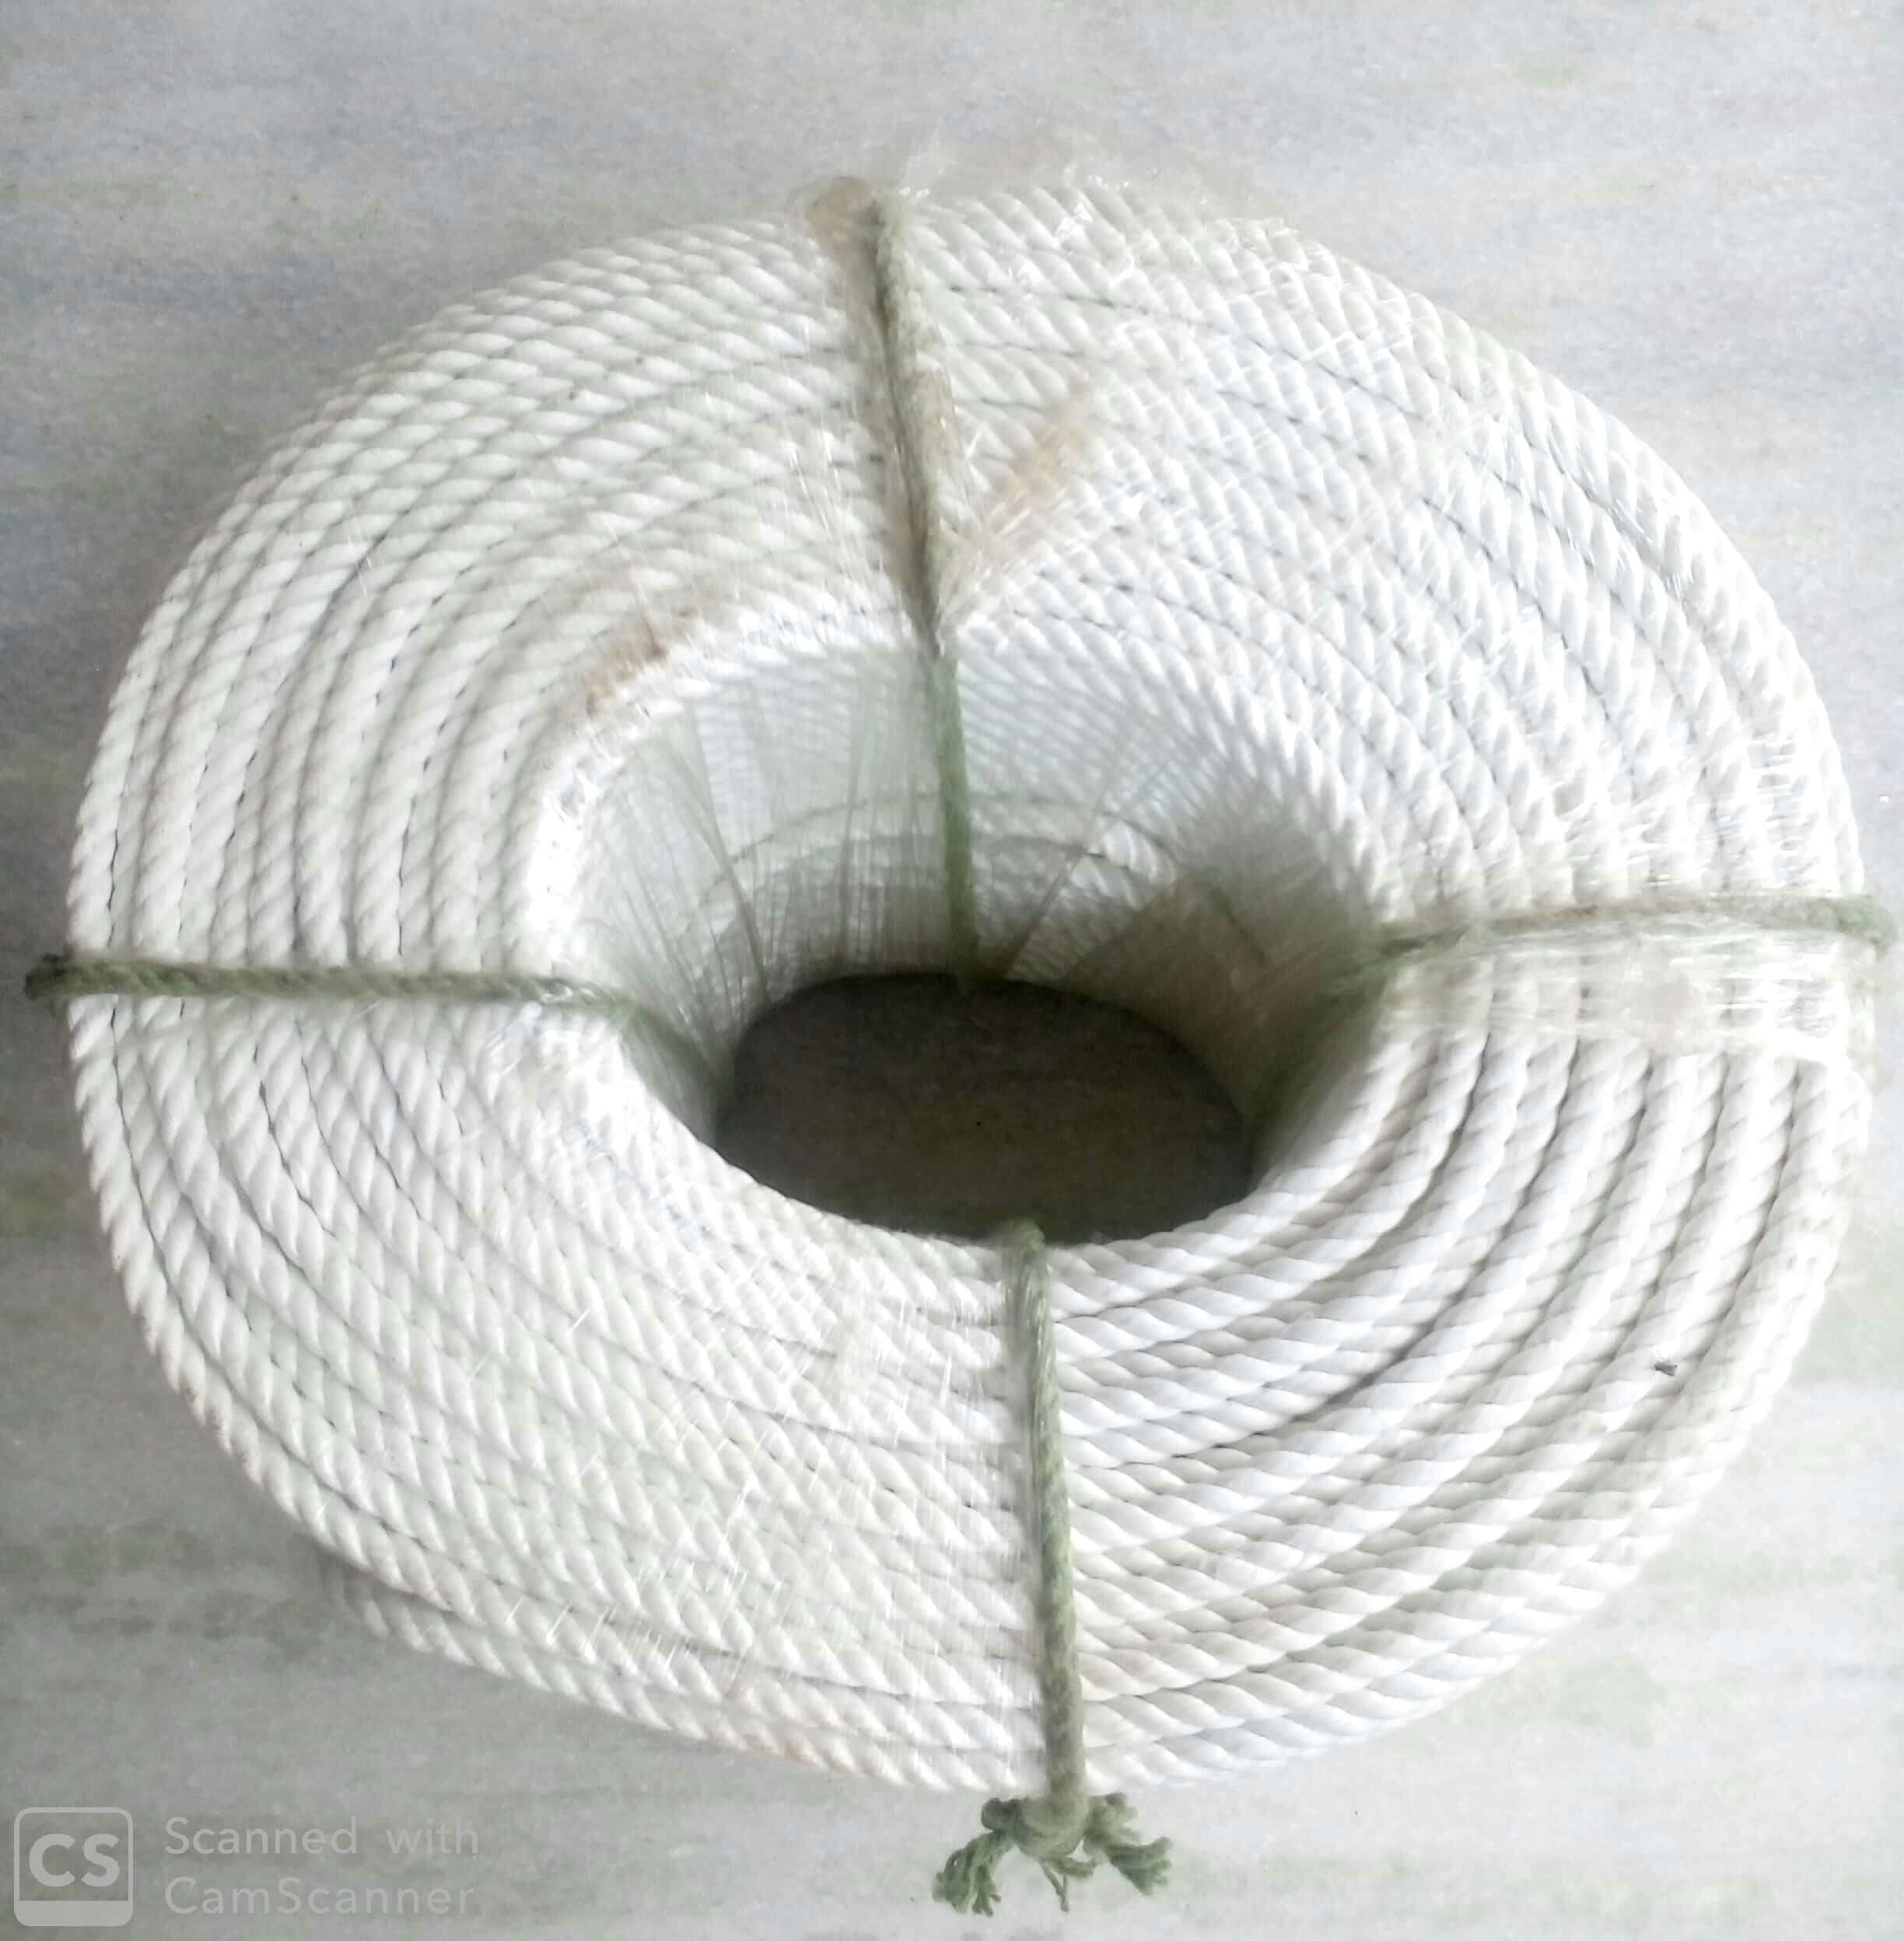 30M Nylon Rope 6MM White Multifunctional Nylon Cord Hanging String for Washing Line Garden Bundling Camping Outdoor Activities 